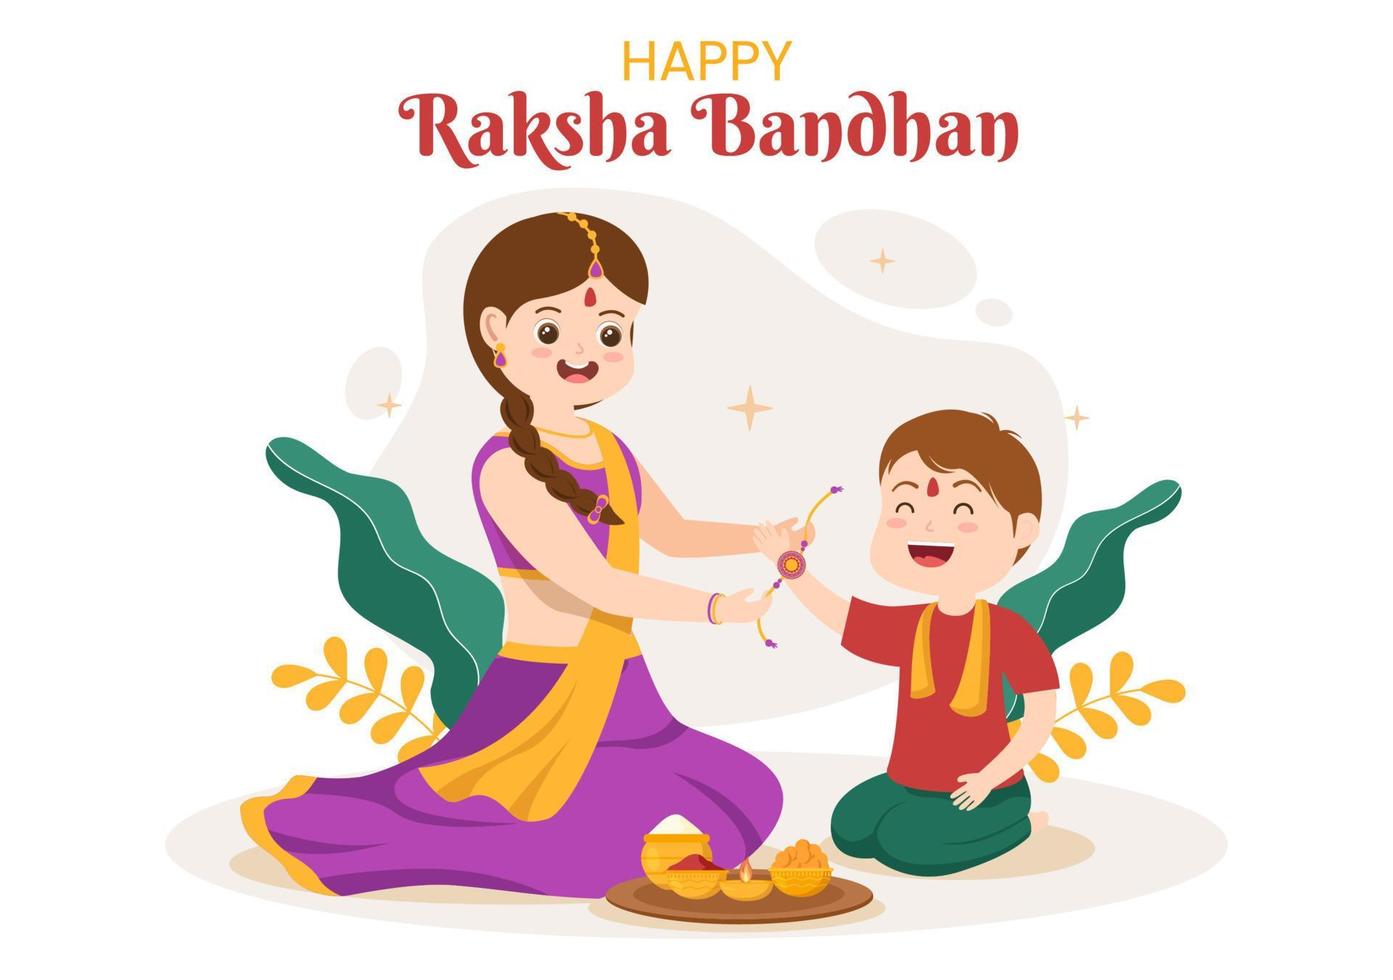 Happy Raksha Bandhan Cartoon Illustration with Sister Tying Rakhi on Her Brothers Wrist to Signify Bond of Love in Indian Festival Celebration vector